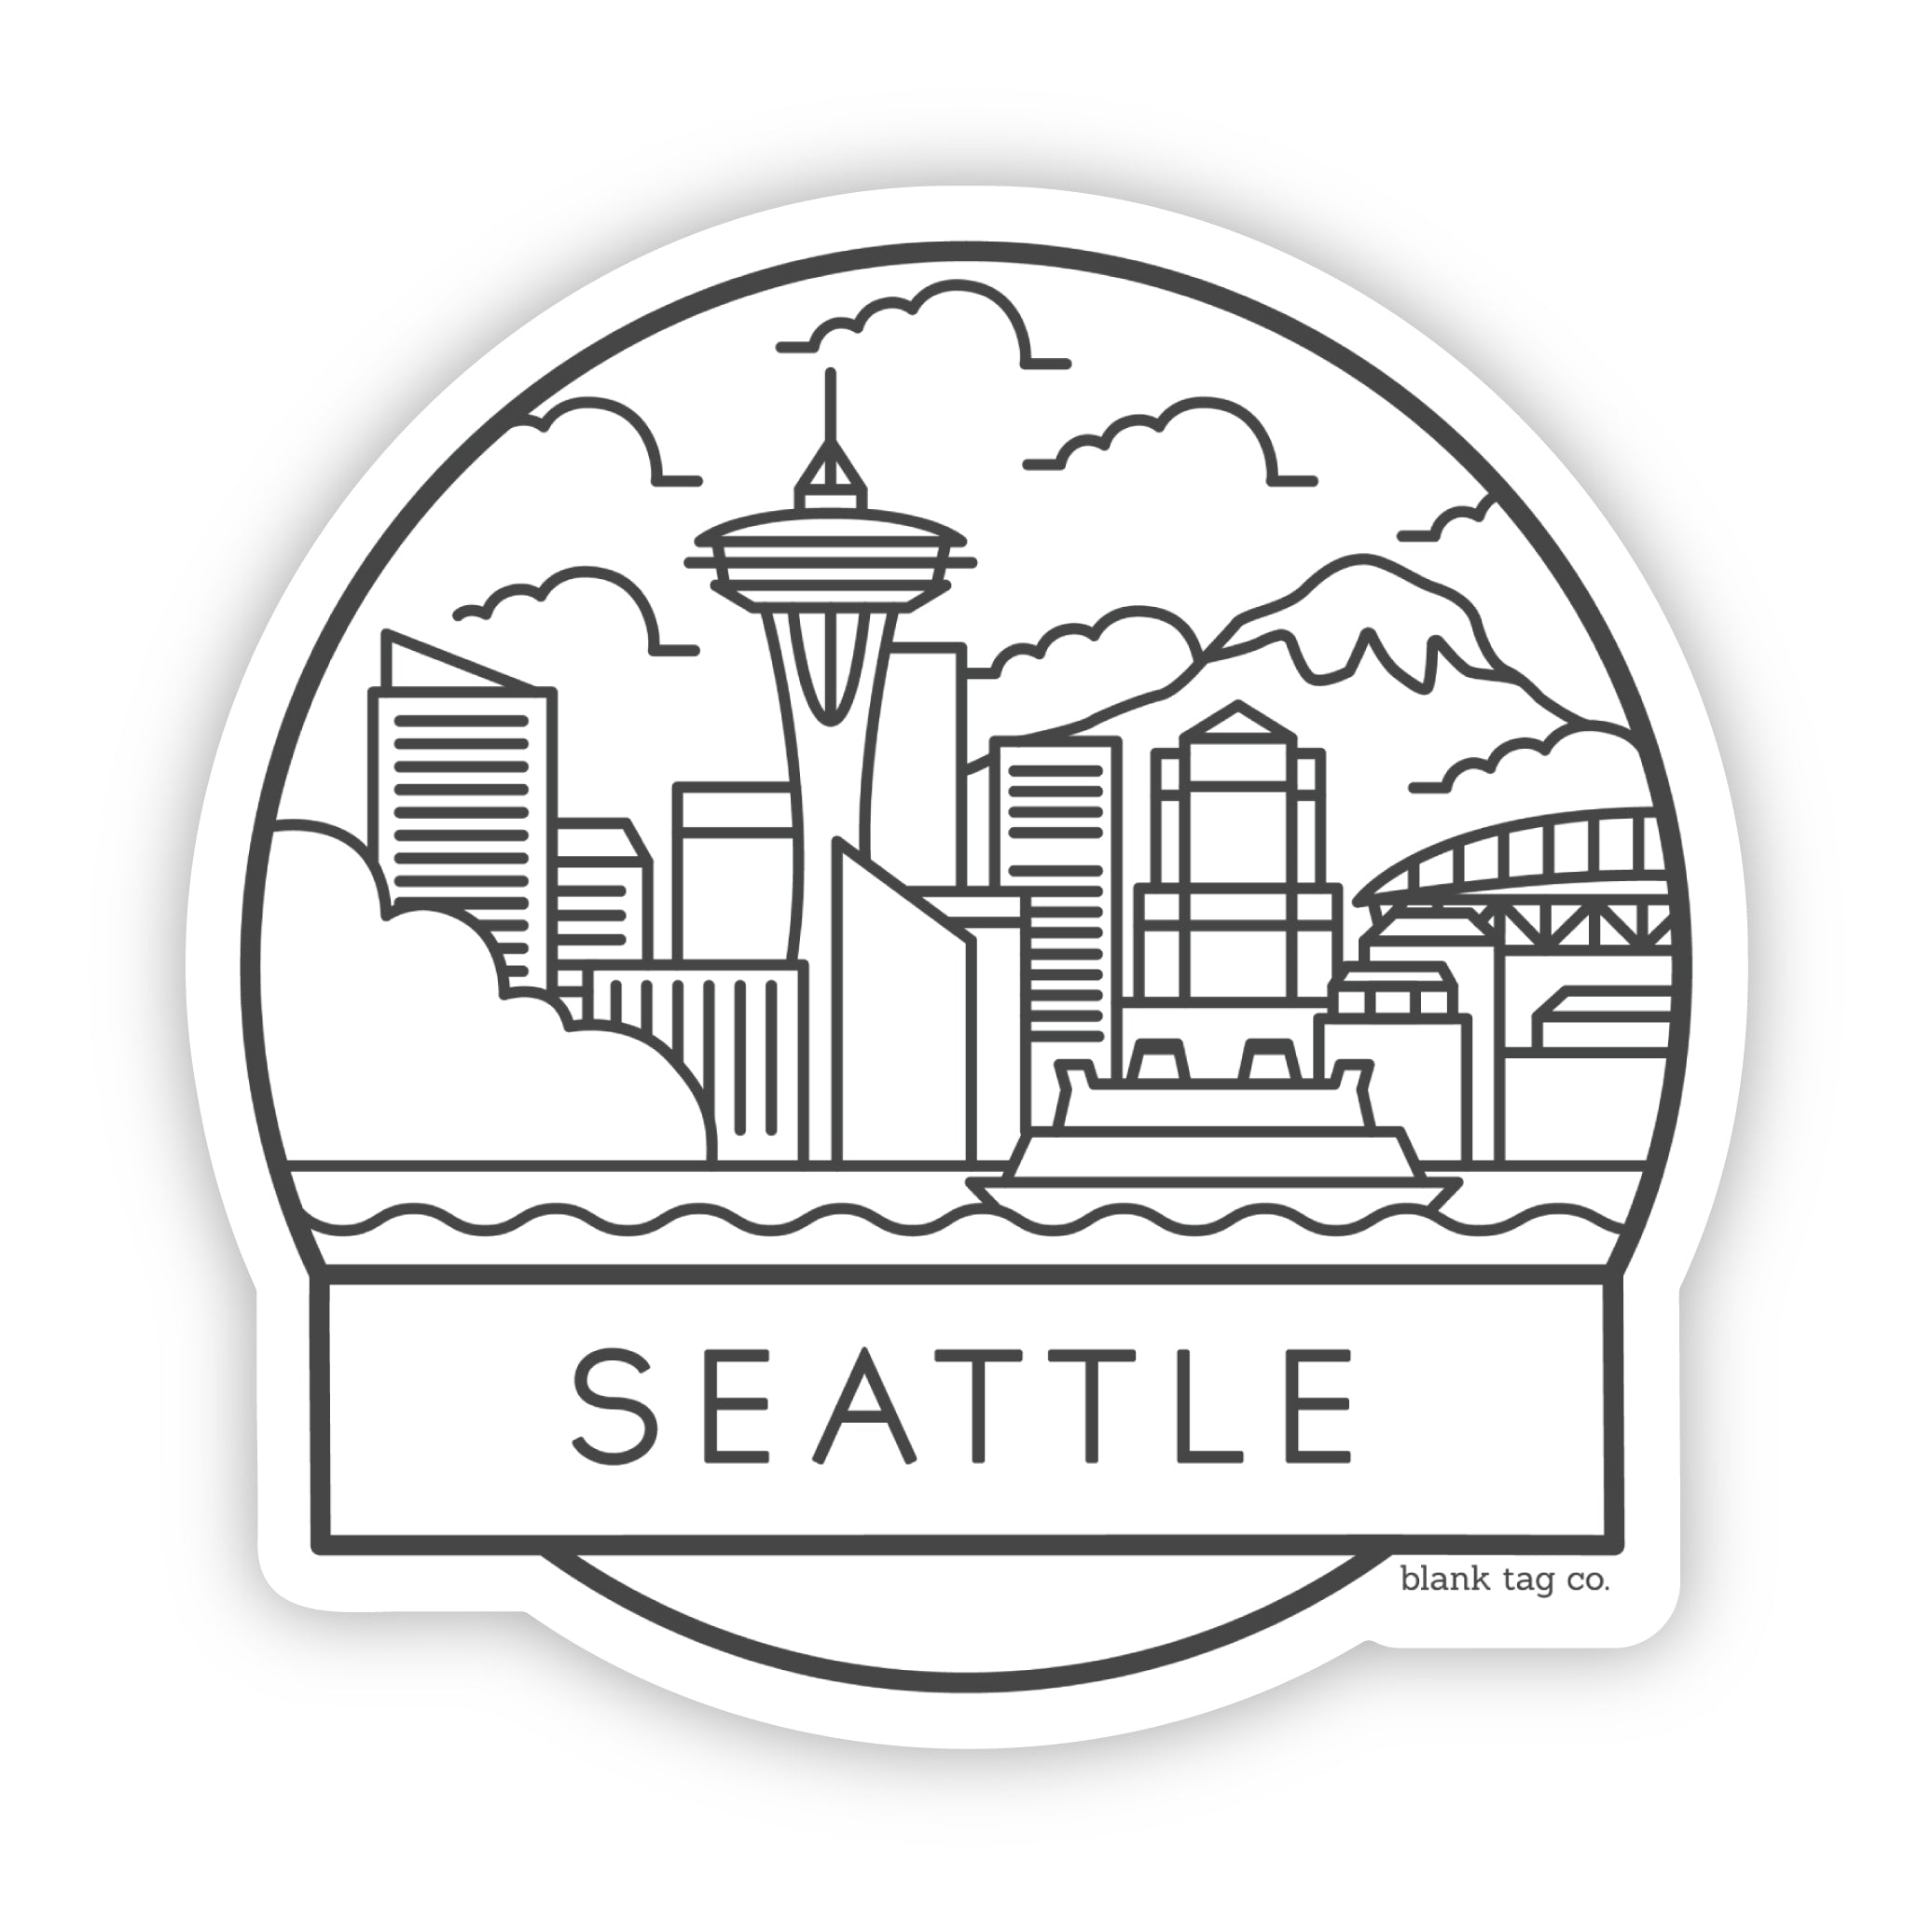 The Seattle Cityscape Sticker